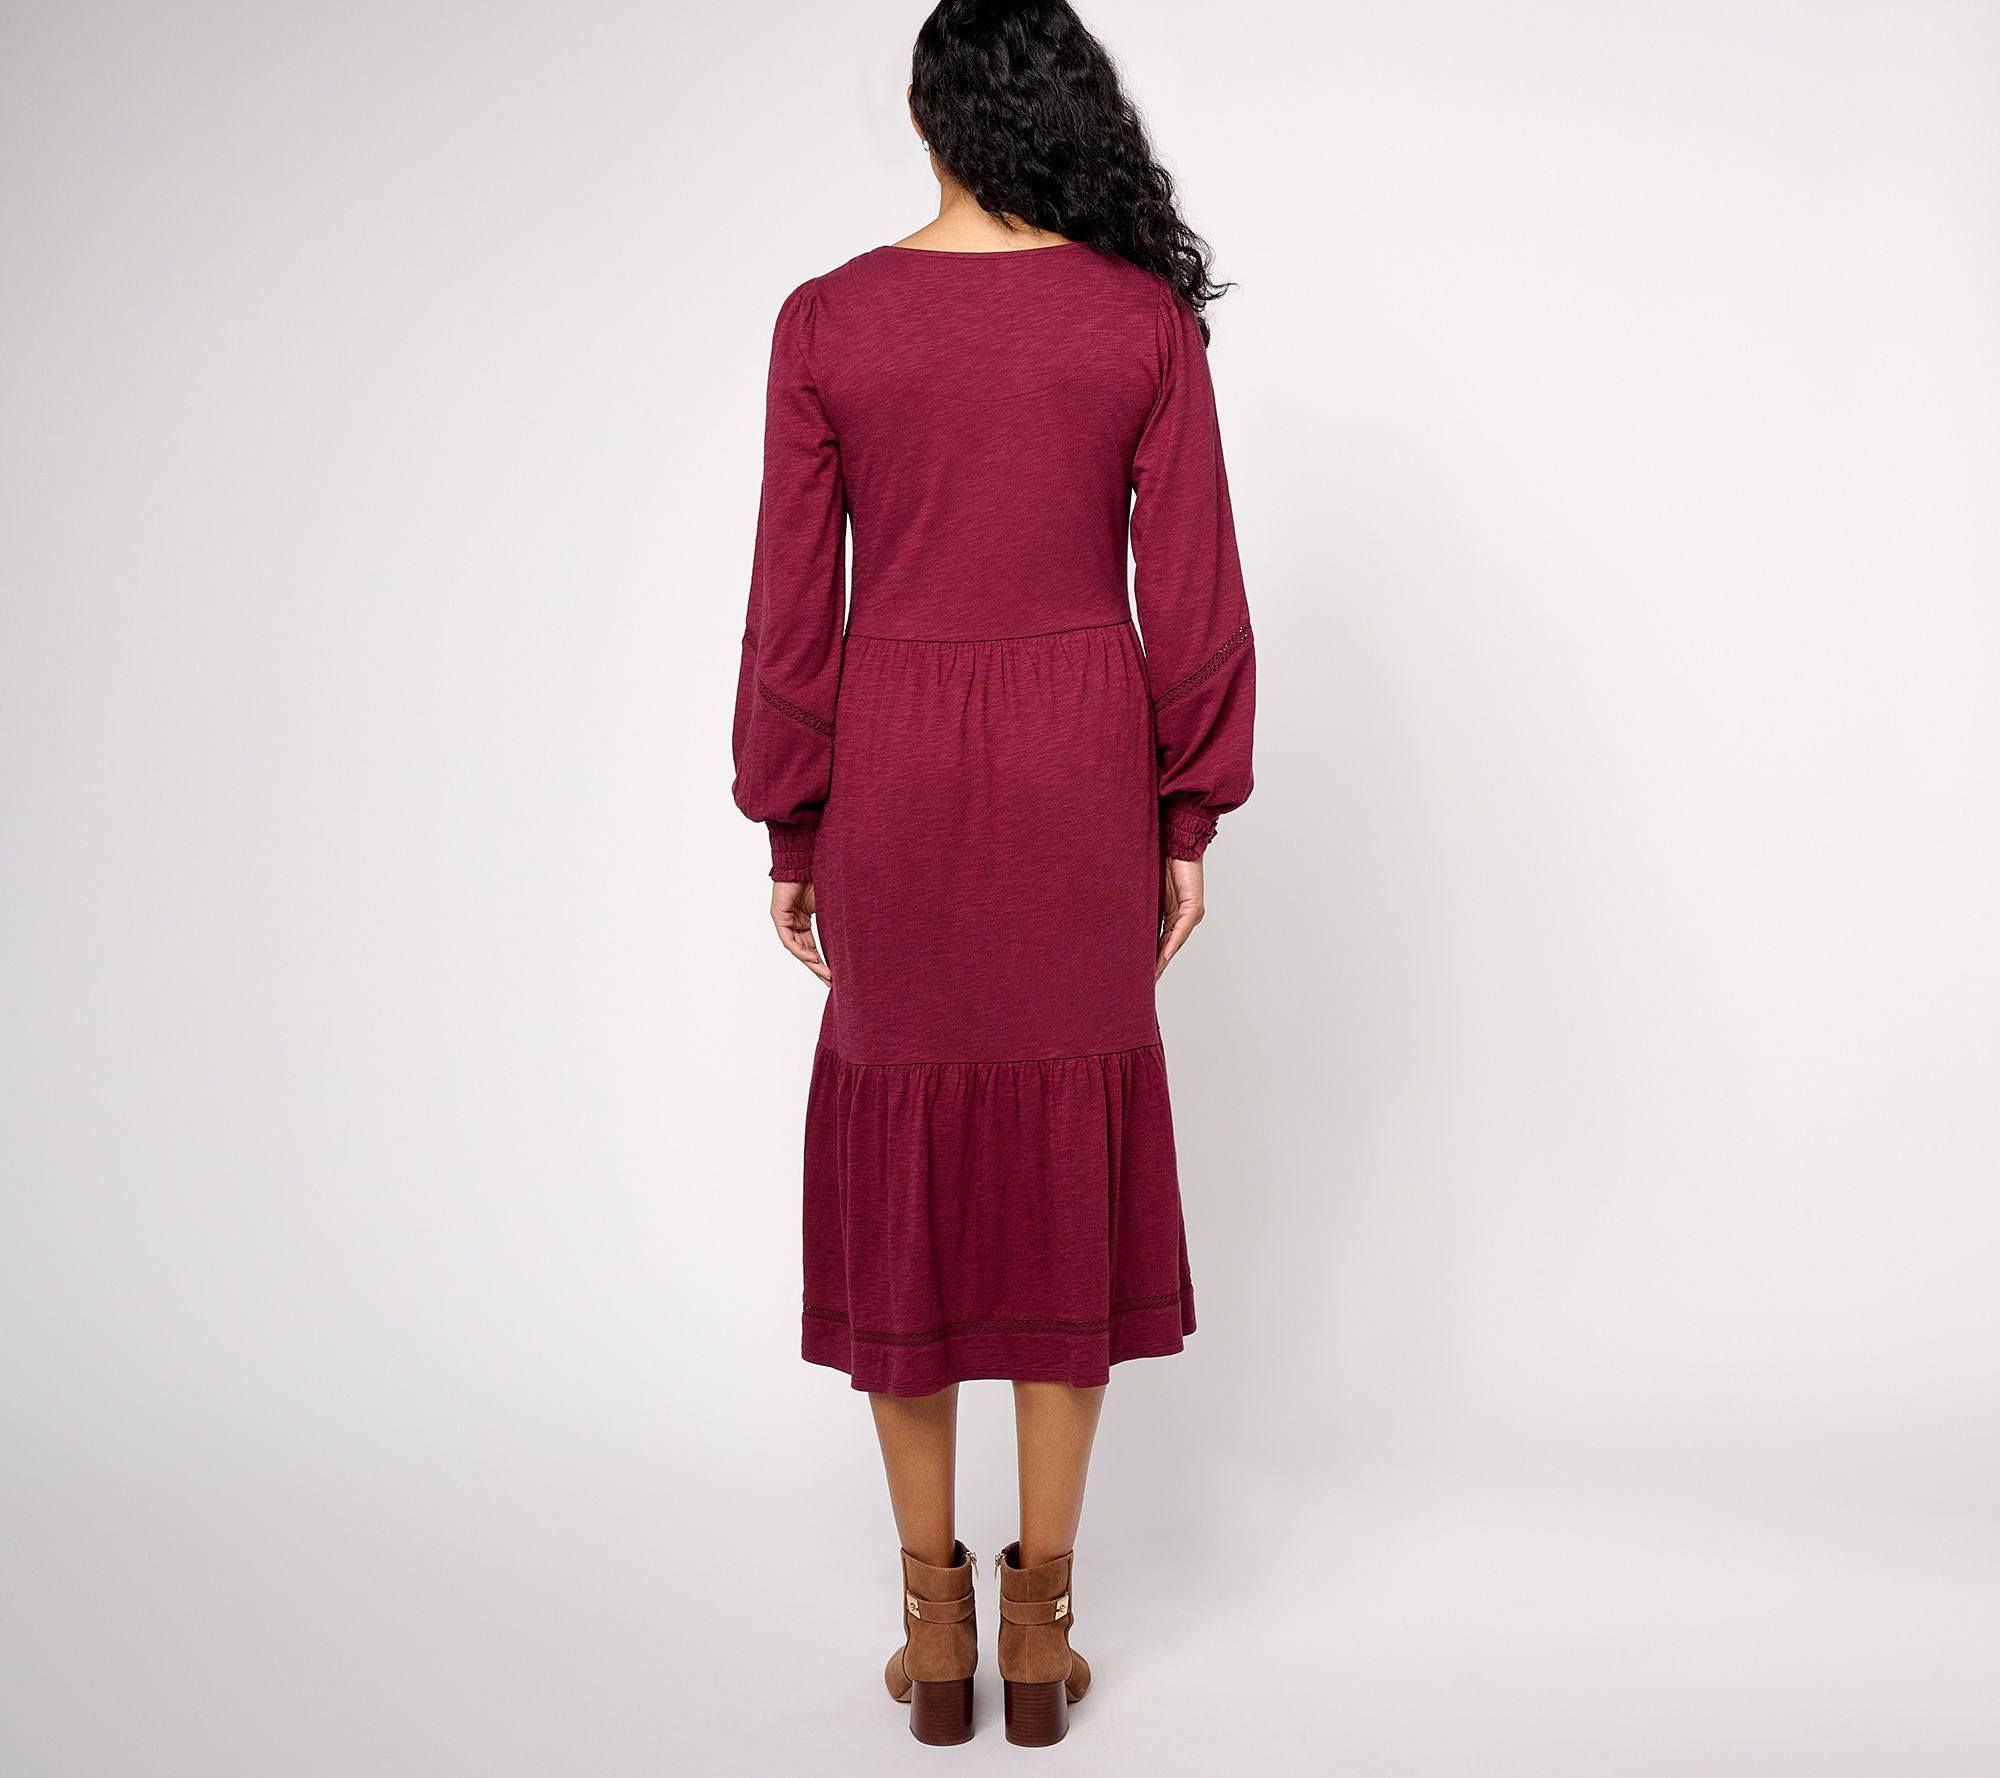 Future Collective Denim Midi Dress at Target Review